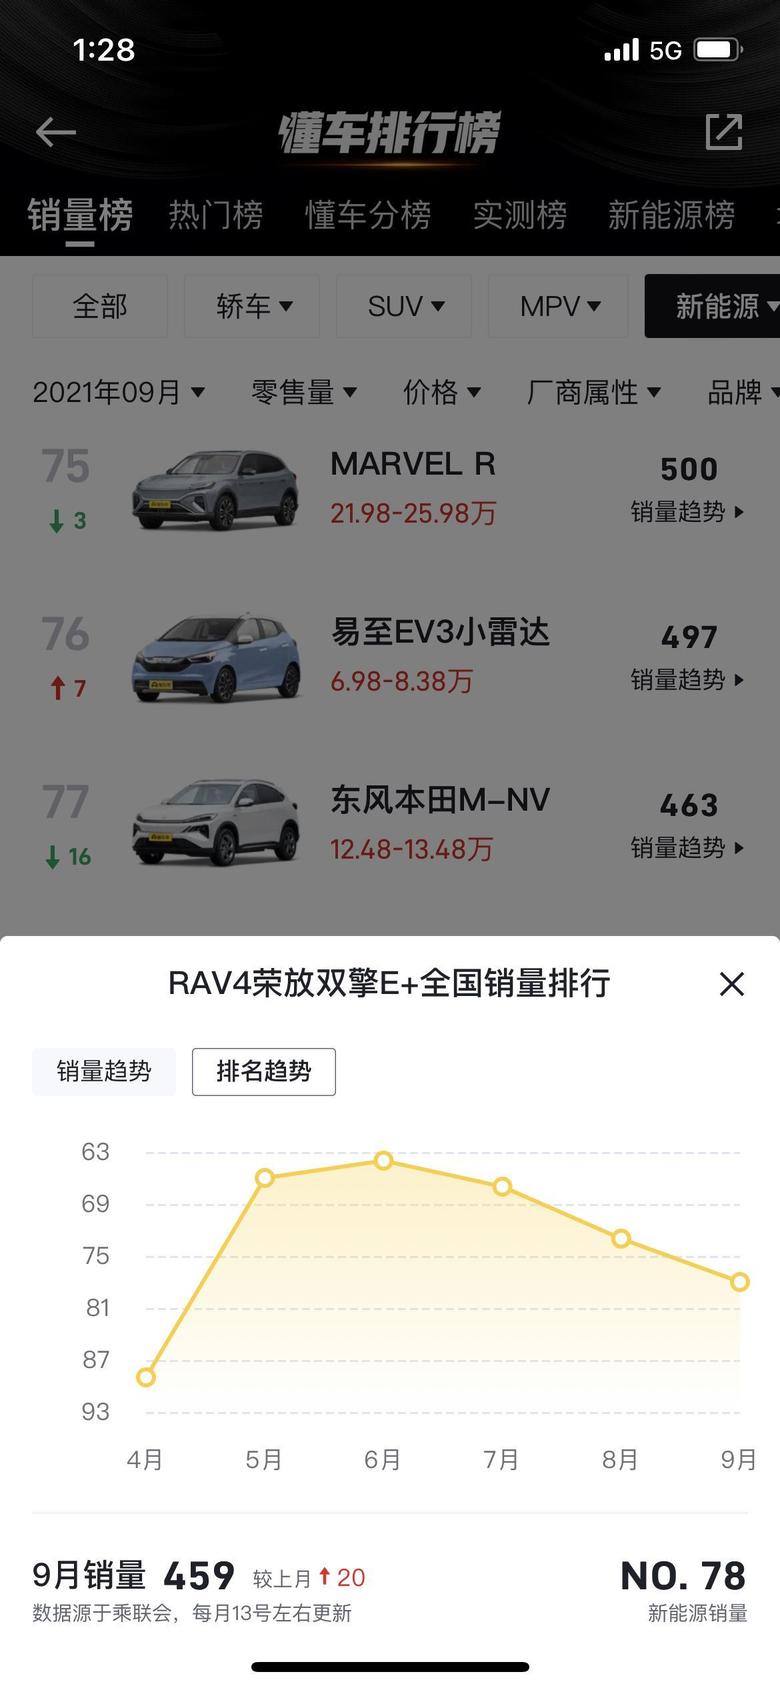 rav4荣放双擎e+ 这销量趋势逐月下滑啊，威兰达高性能优惠2万还是销量好些！Ｅ+这销量，什么时候支持快充！